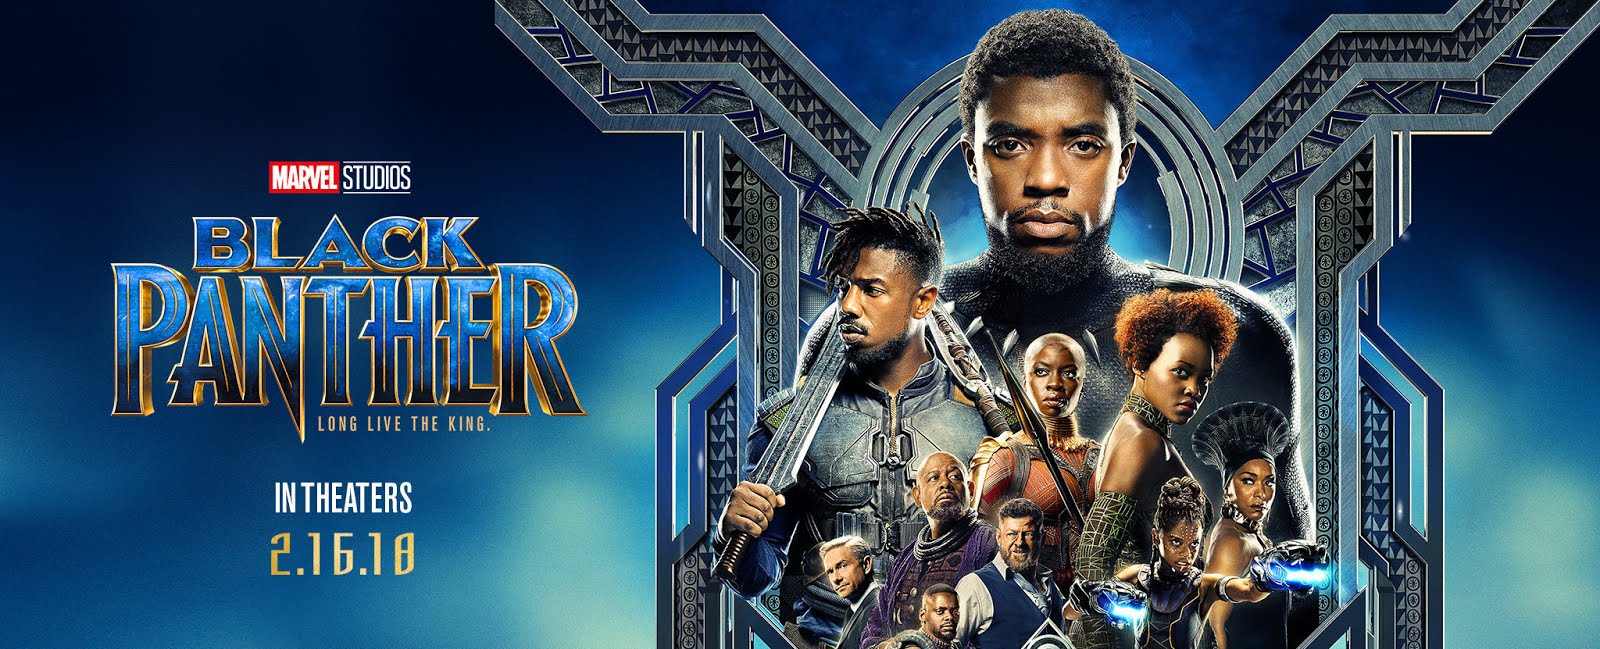 Black Panther (English) hindi dubbed 720p movies